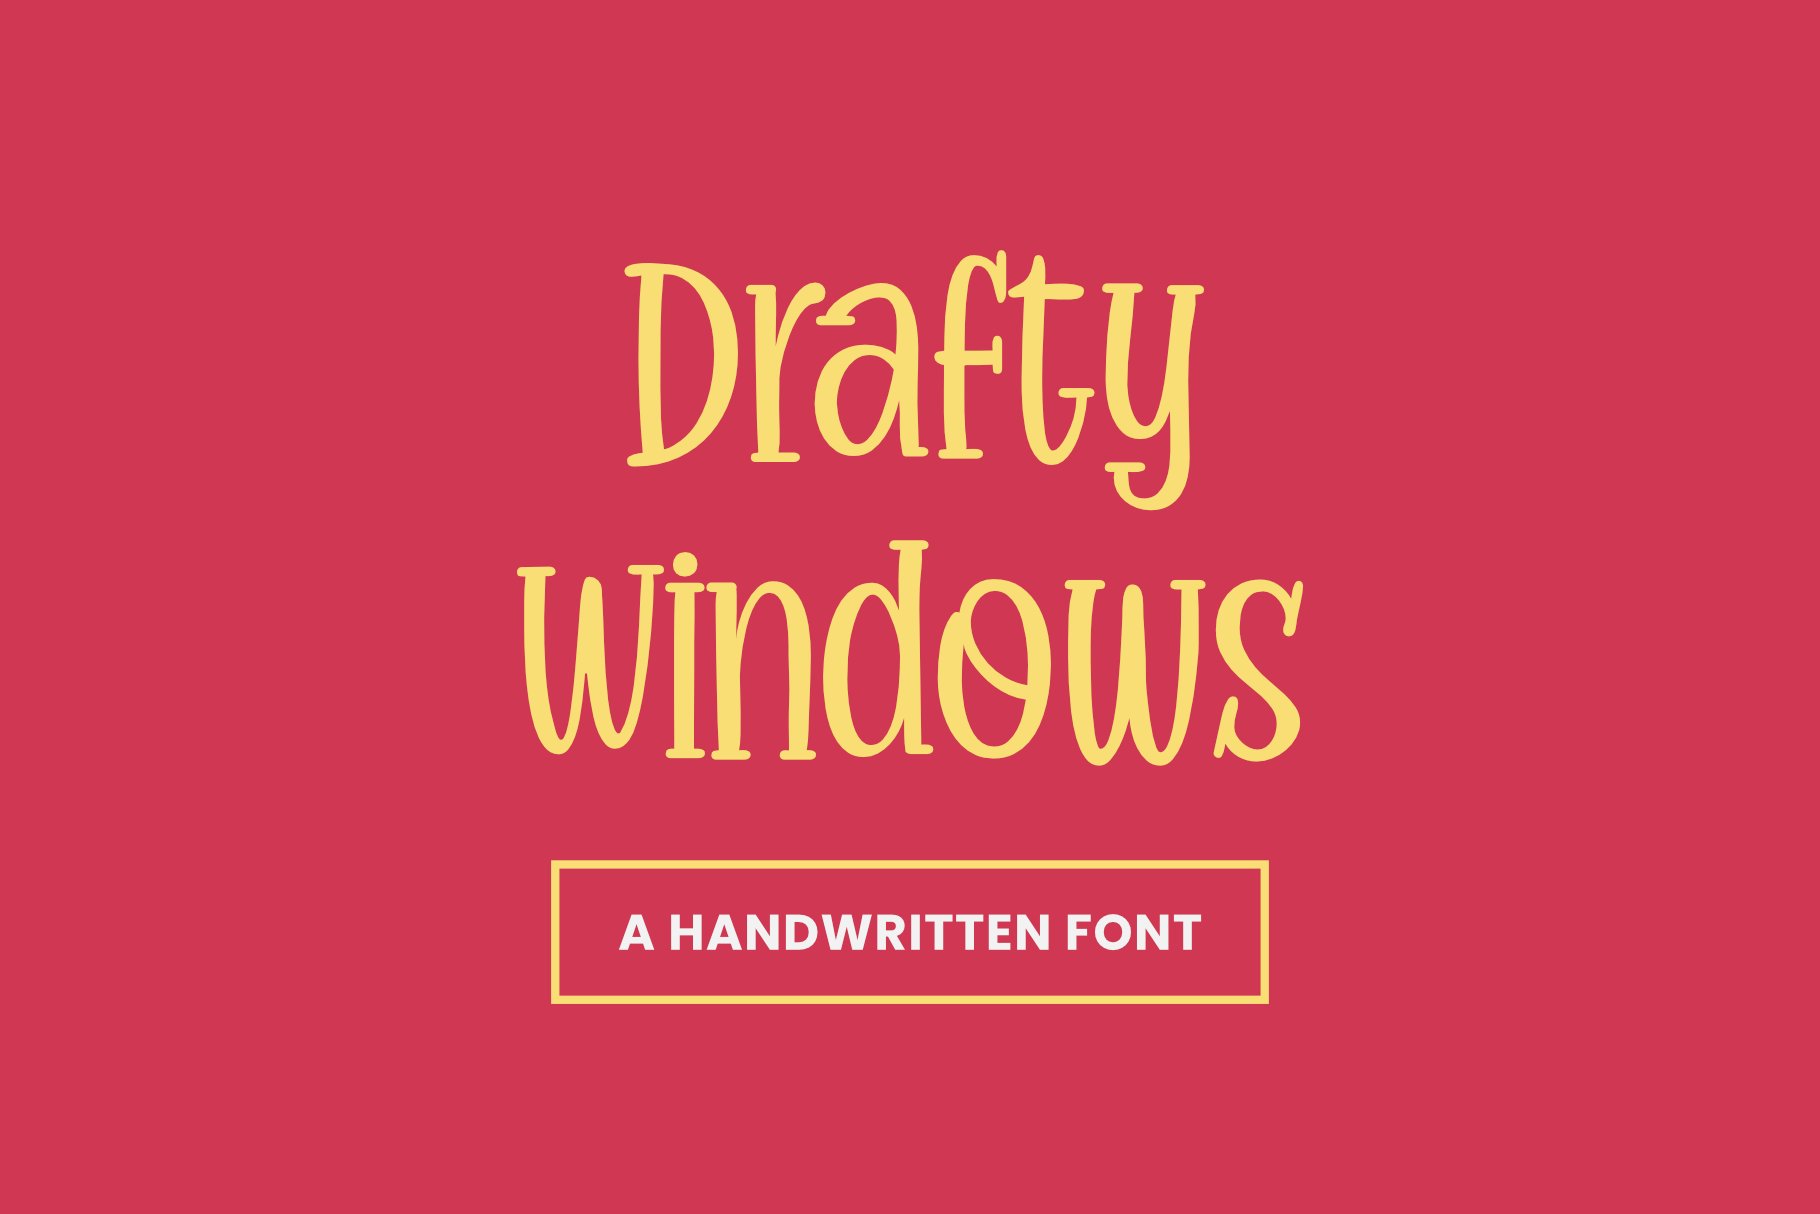 Drafty Windows - a Handwritten Font cover image.